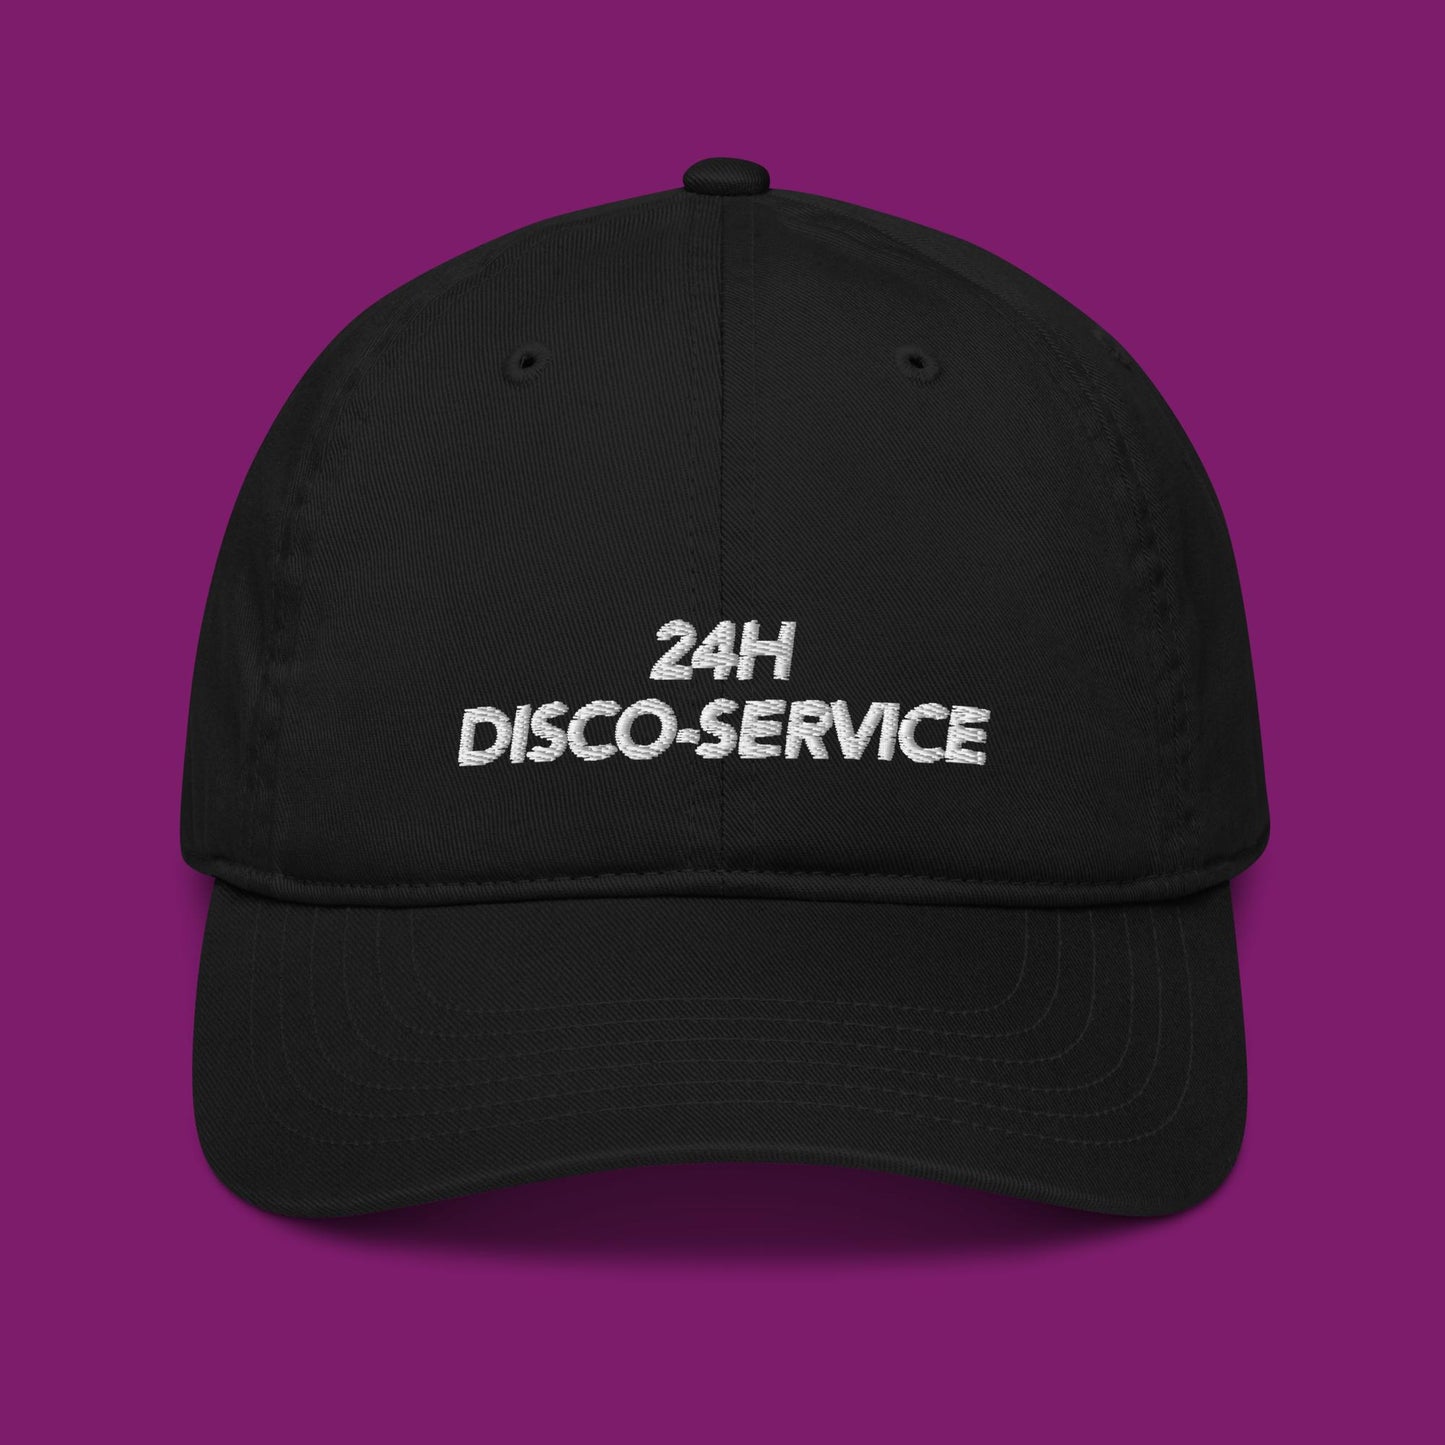 »24H DISCO-SERVICE« – DJ Organic Cotton Baseball & Dad Hat | White Embroidery